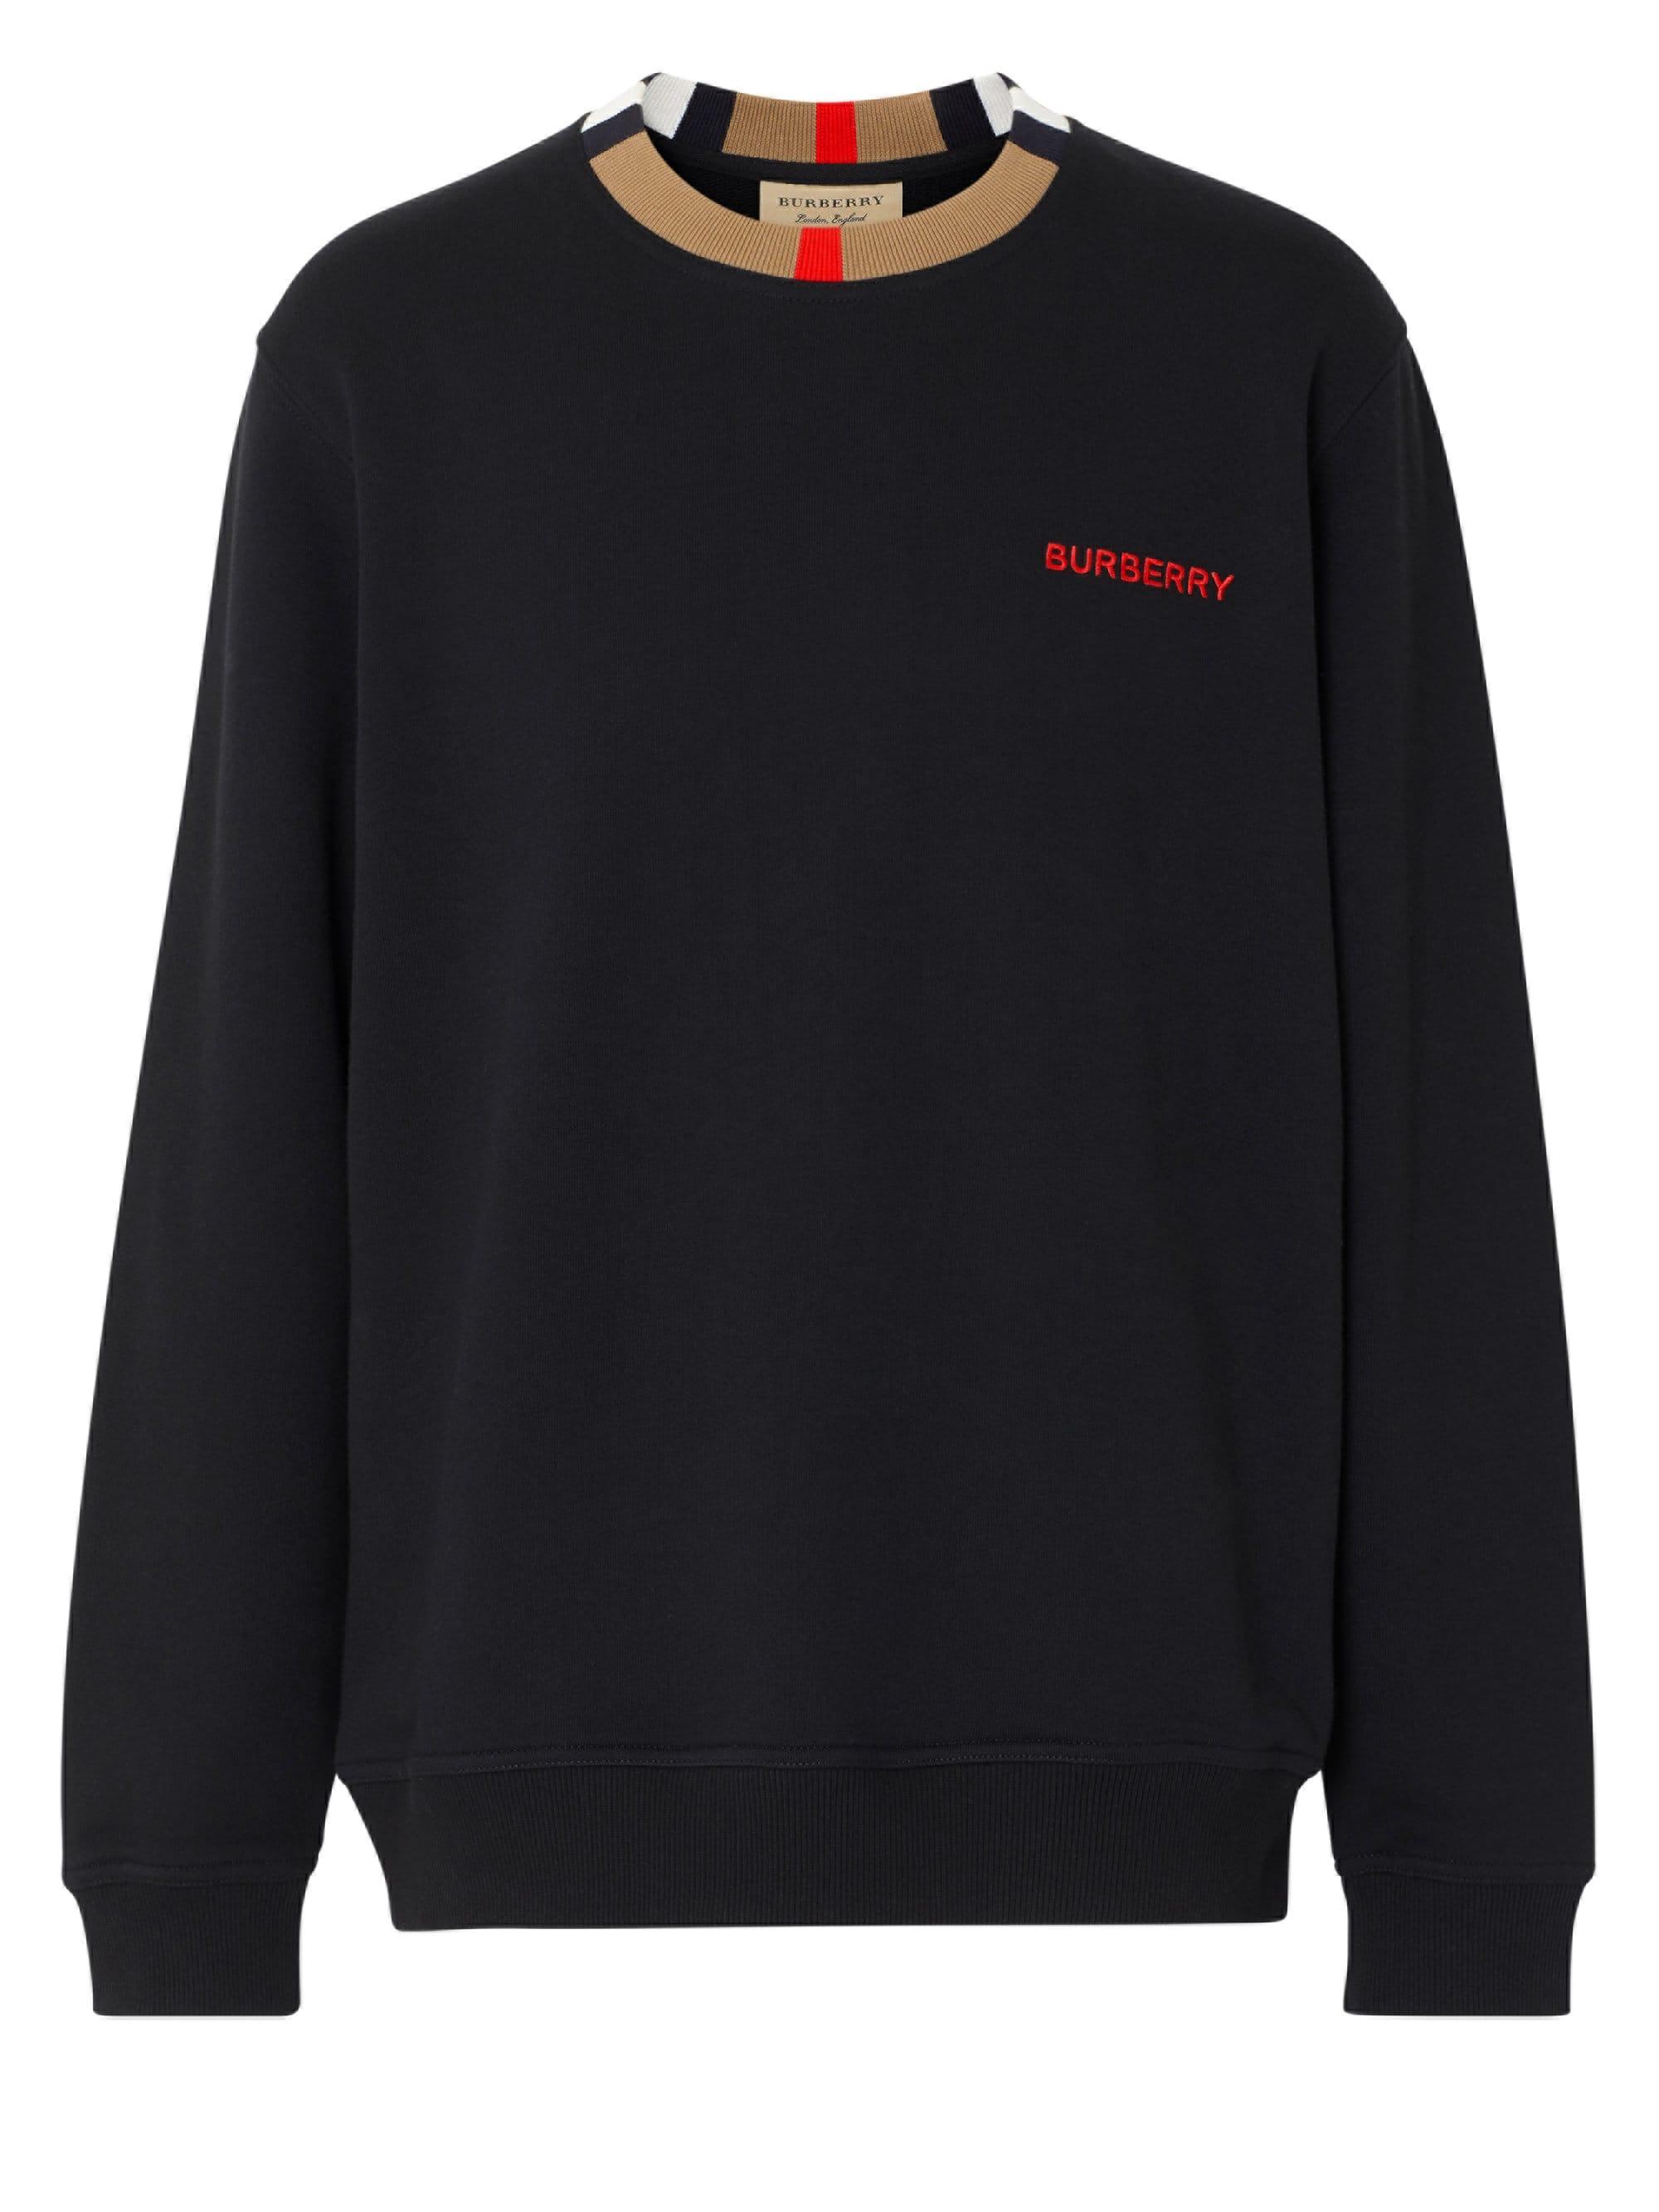 Burberry Cotton Icon Stripe Sweatshirt in Black for Men - Lyst